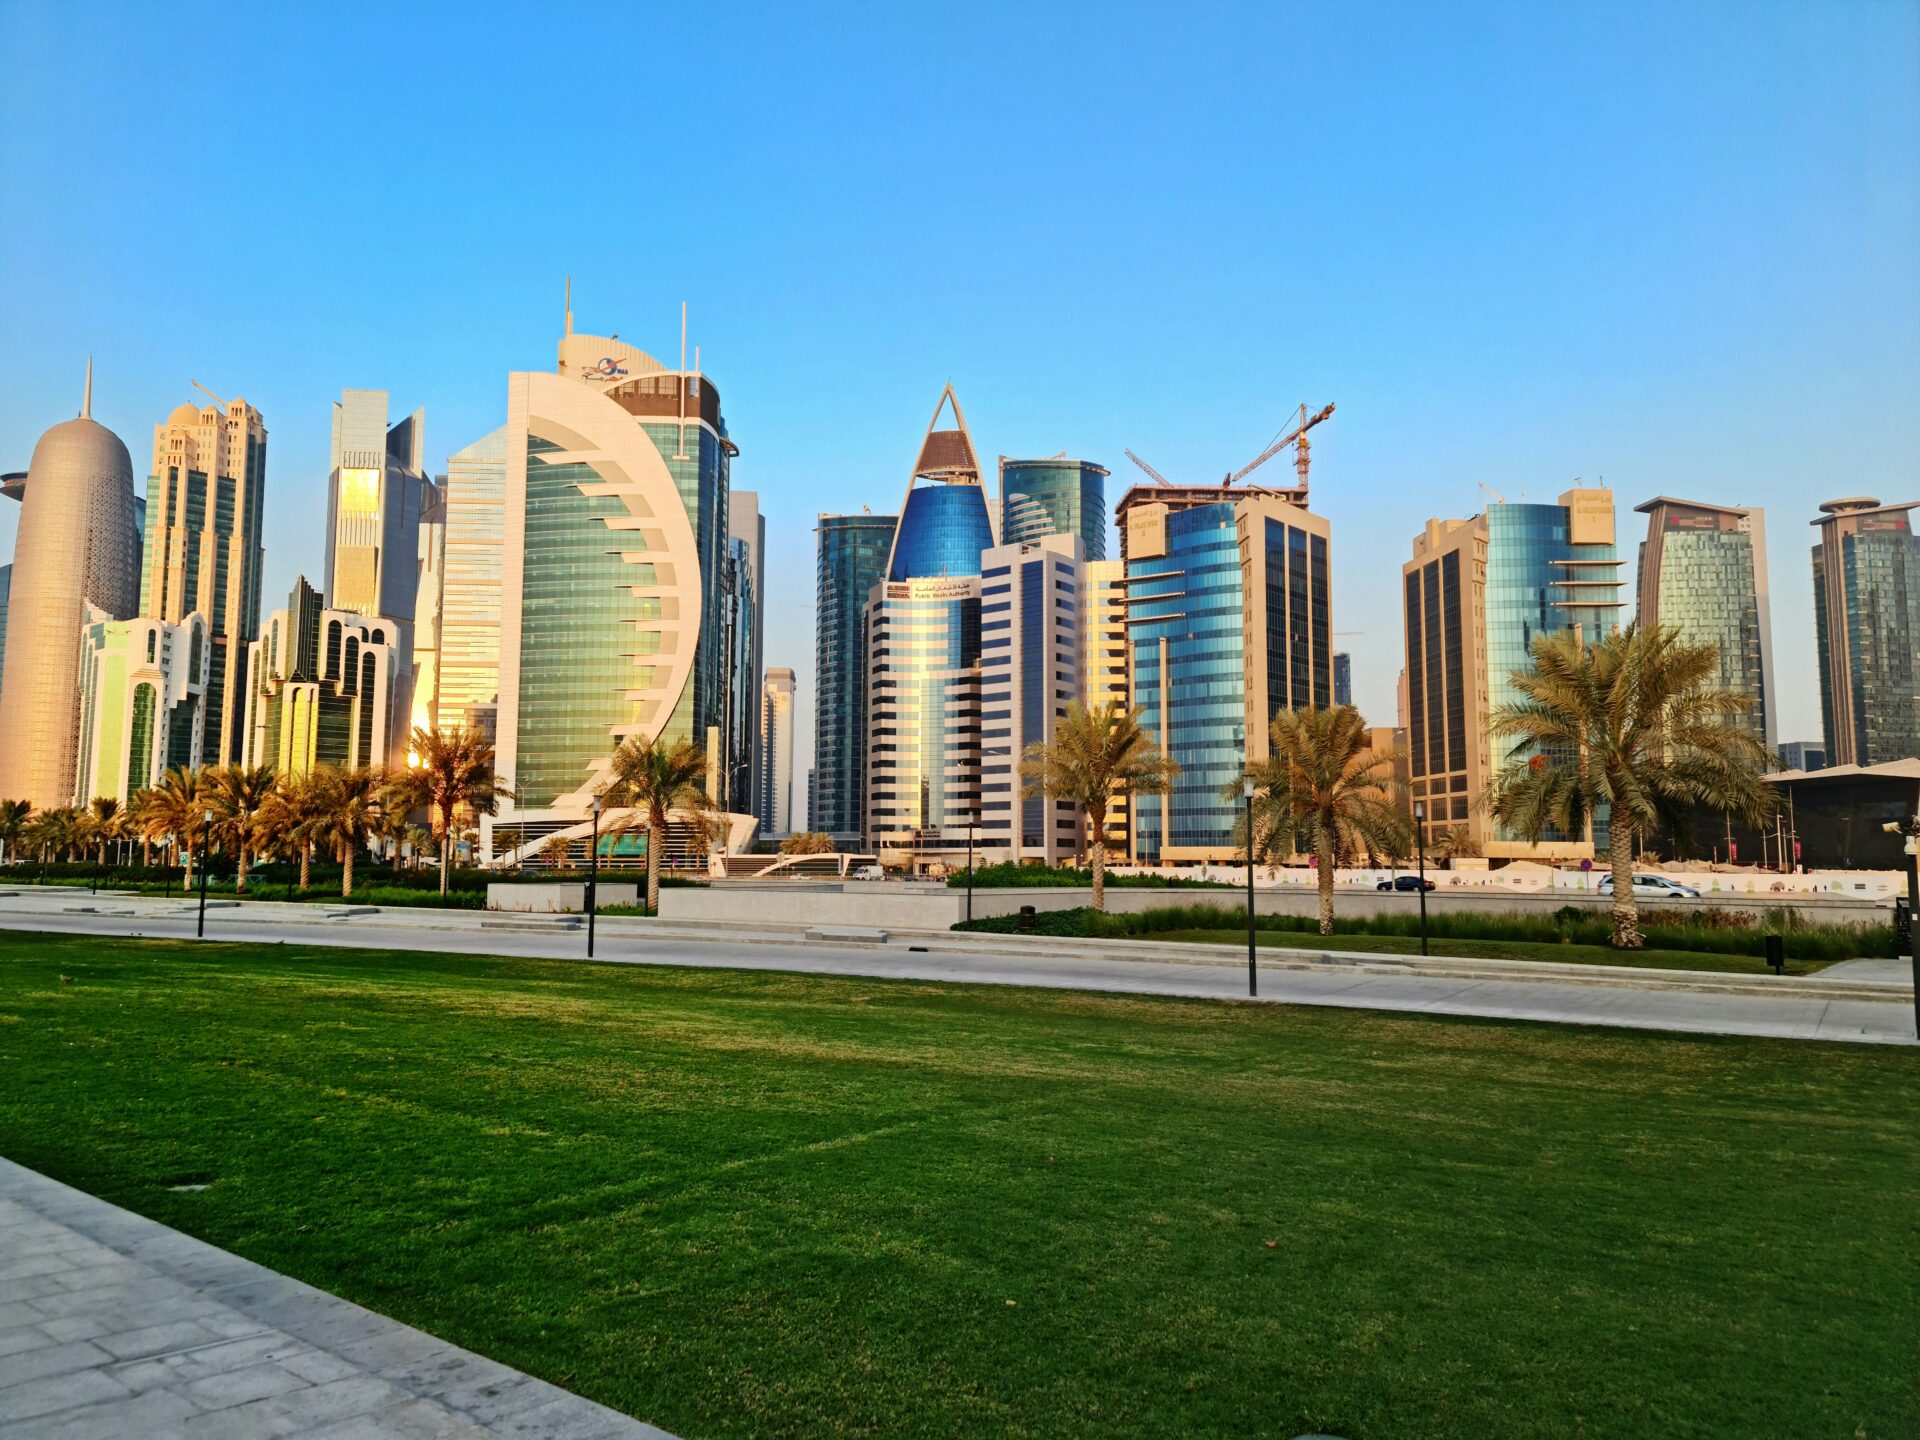 Le Qatar intègre le système de la marque internationale - Brandon IP